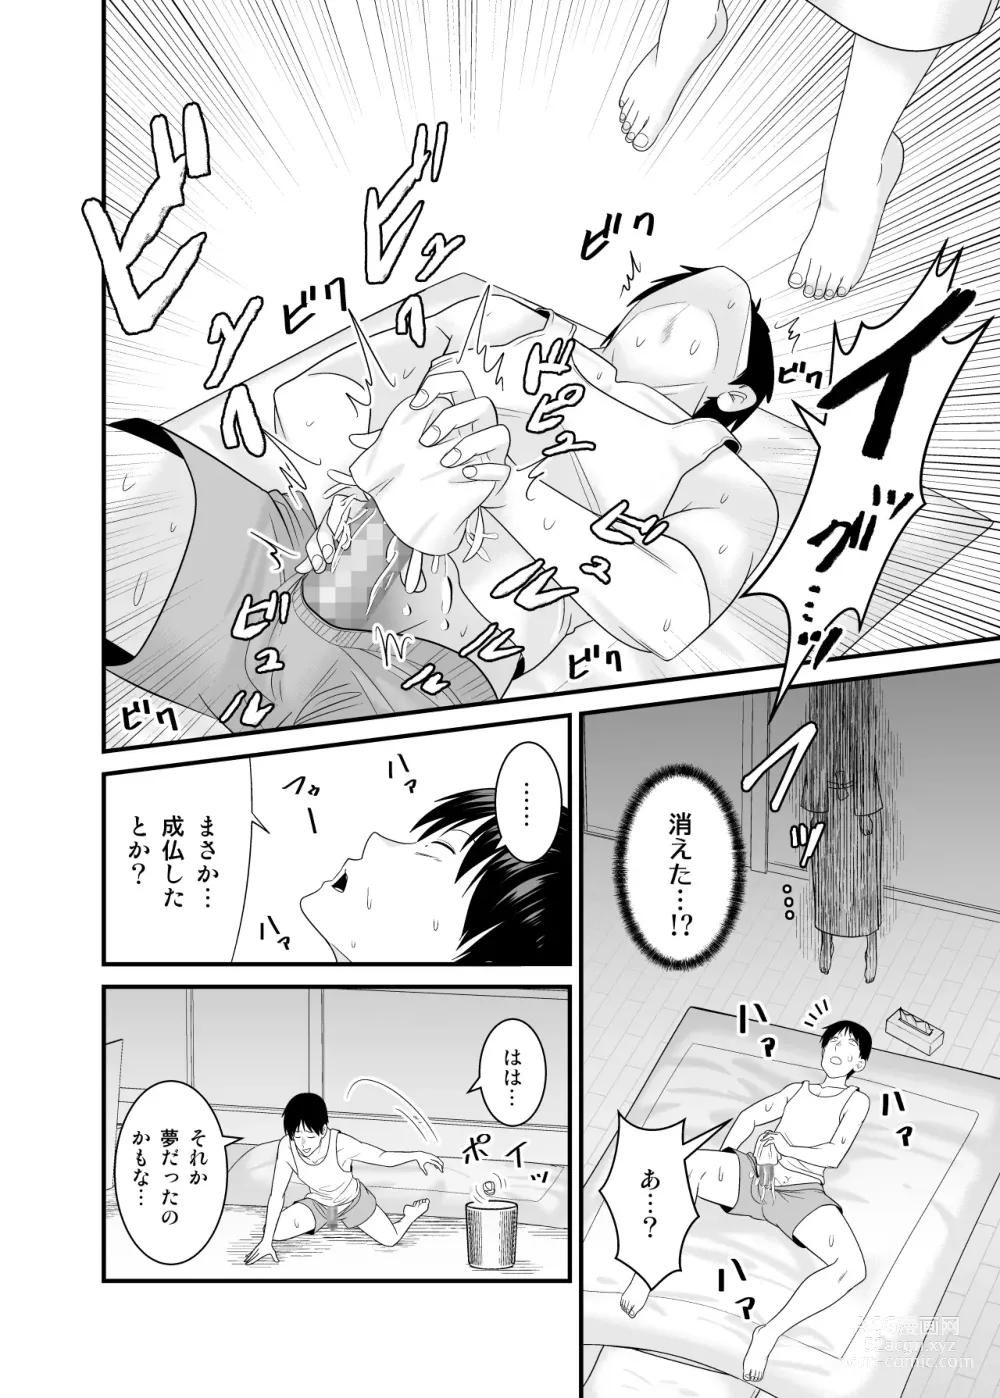 Page 13 of doujinshi ヤバい事故物件に女幽霊が出たけど無職底辺の俺はセックスしまくる